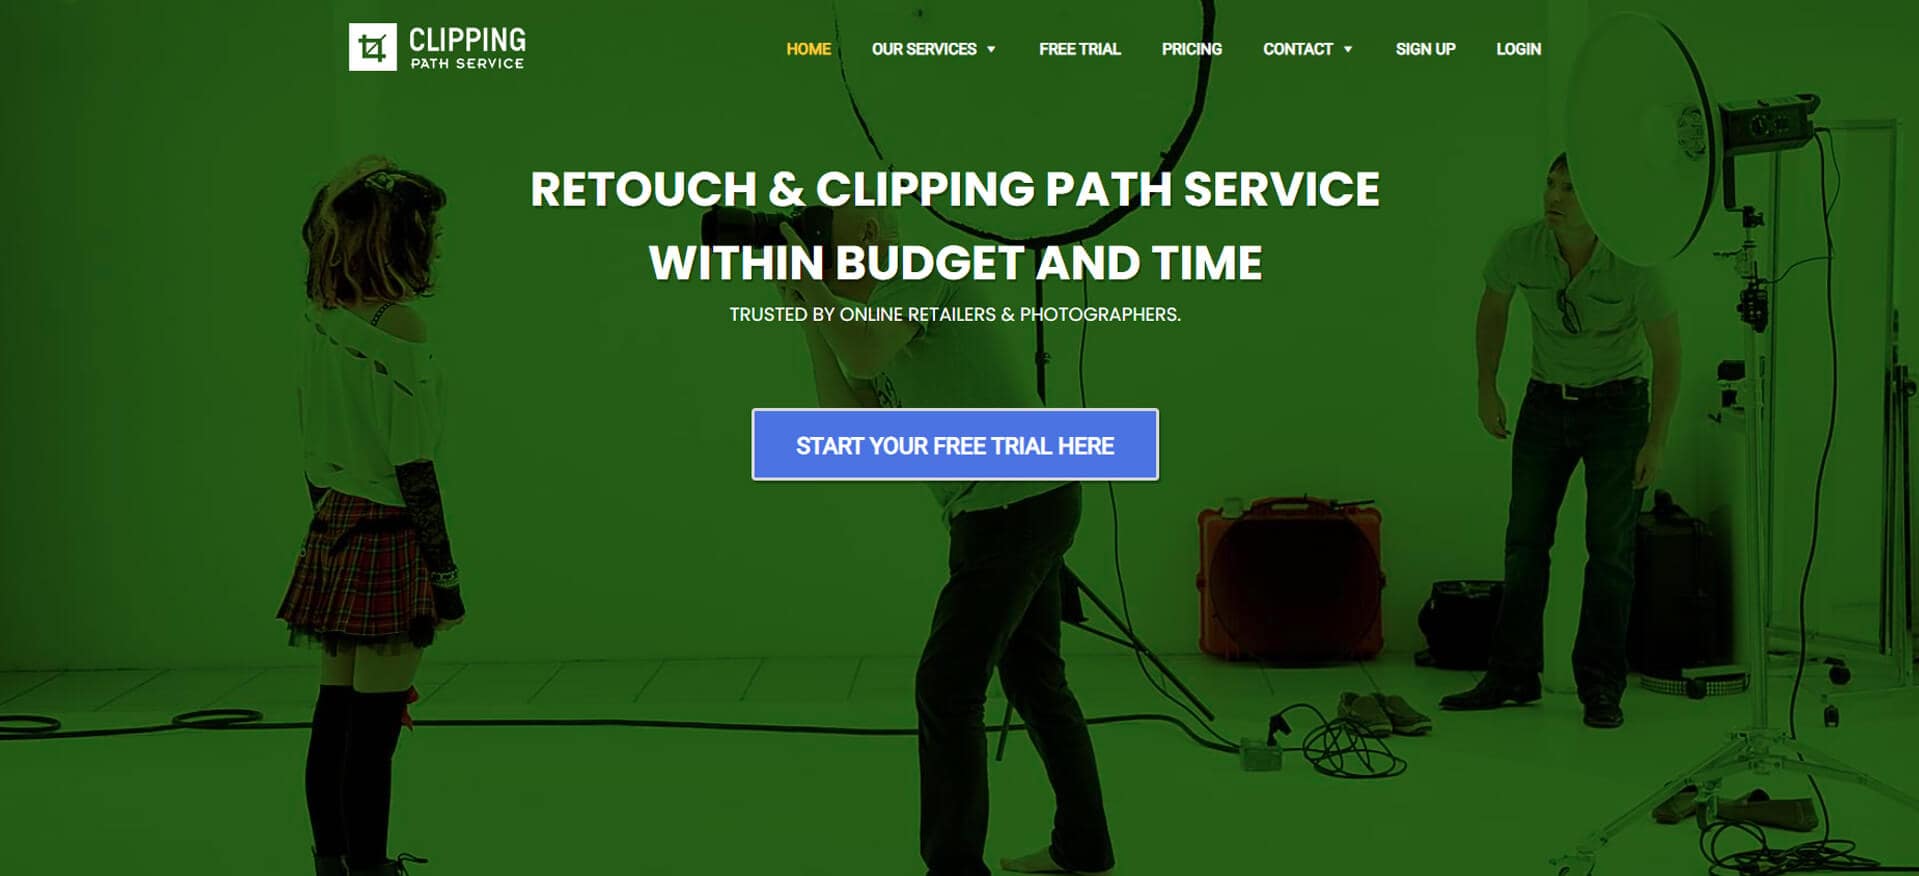 Clippingpathservice.com